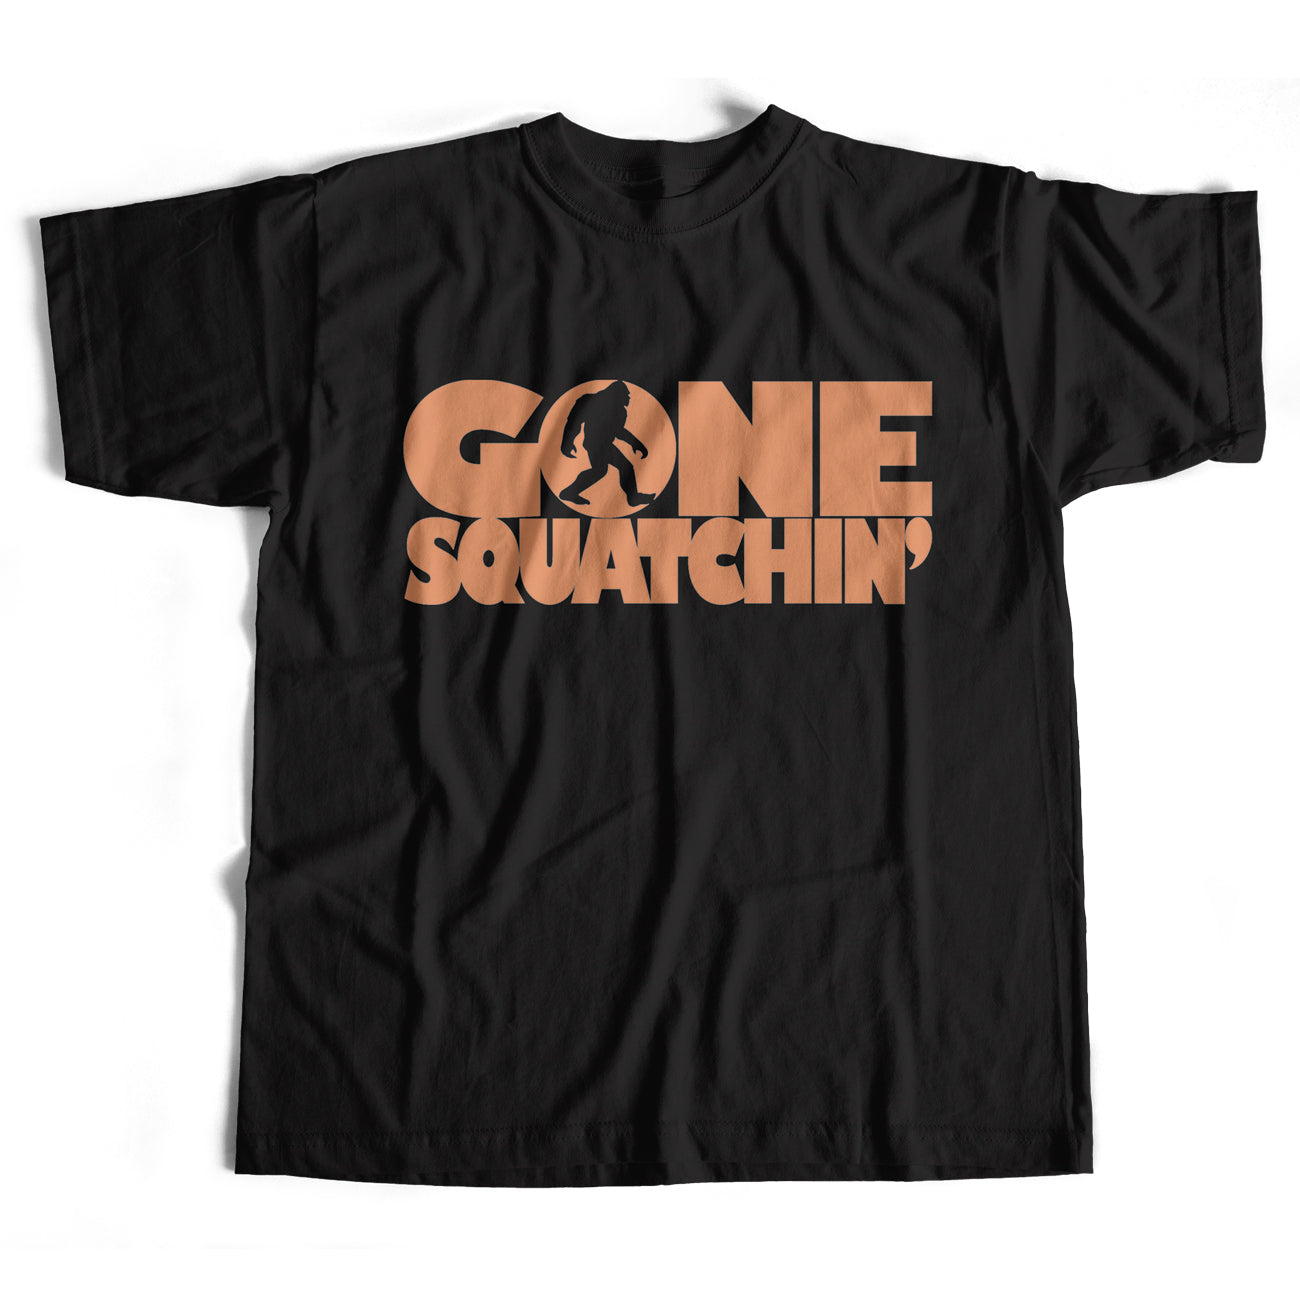 Old Skool Hooligans Bigfoot T Shirt - Gone Squatchin' Logo Sasquatch